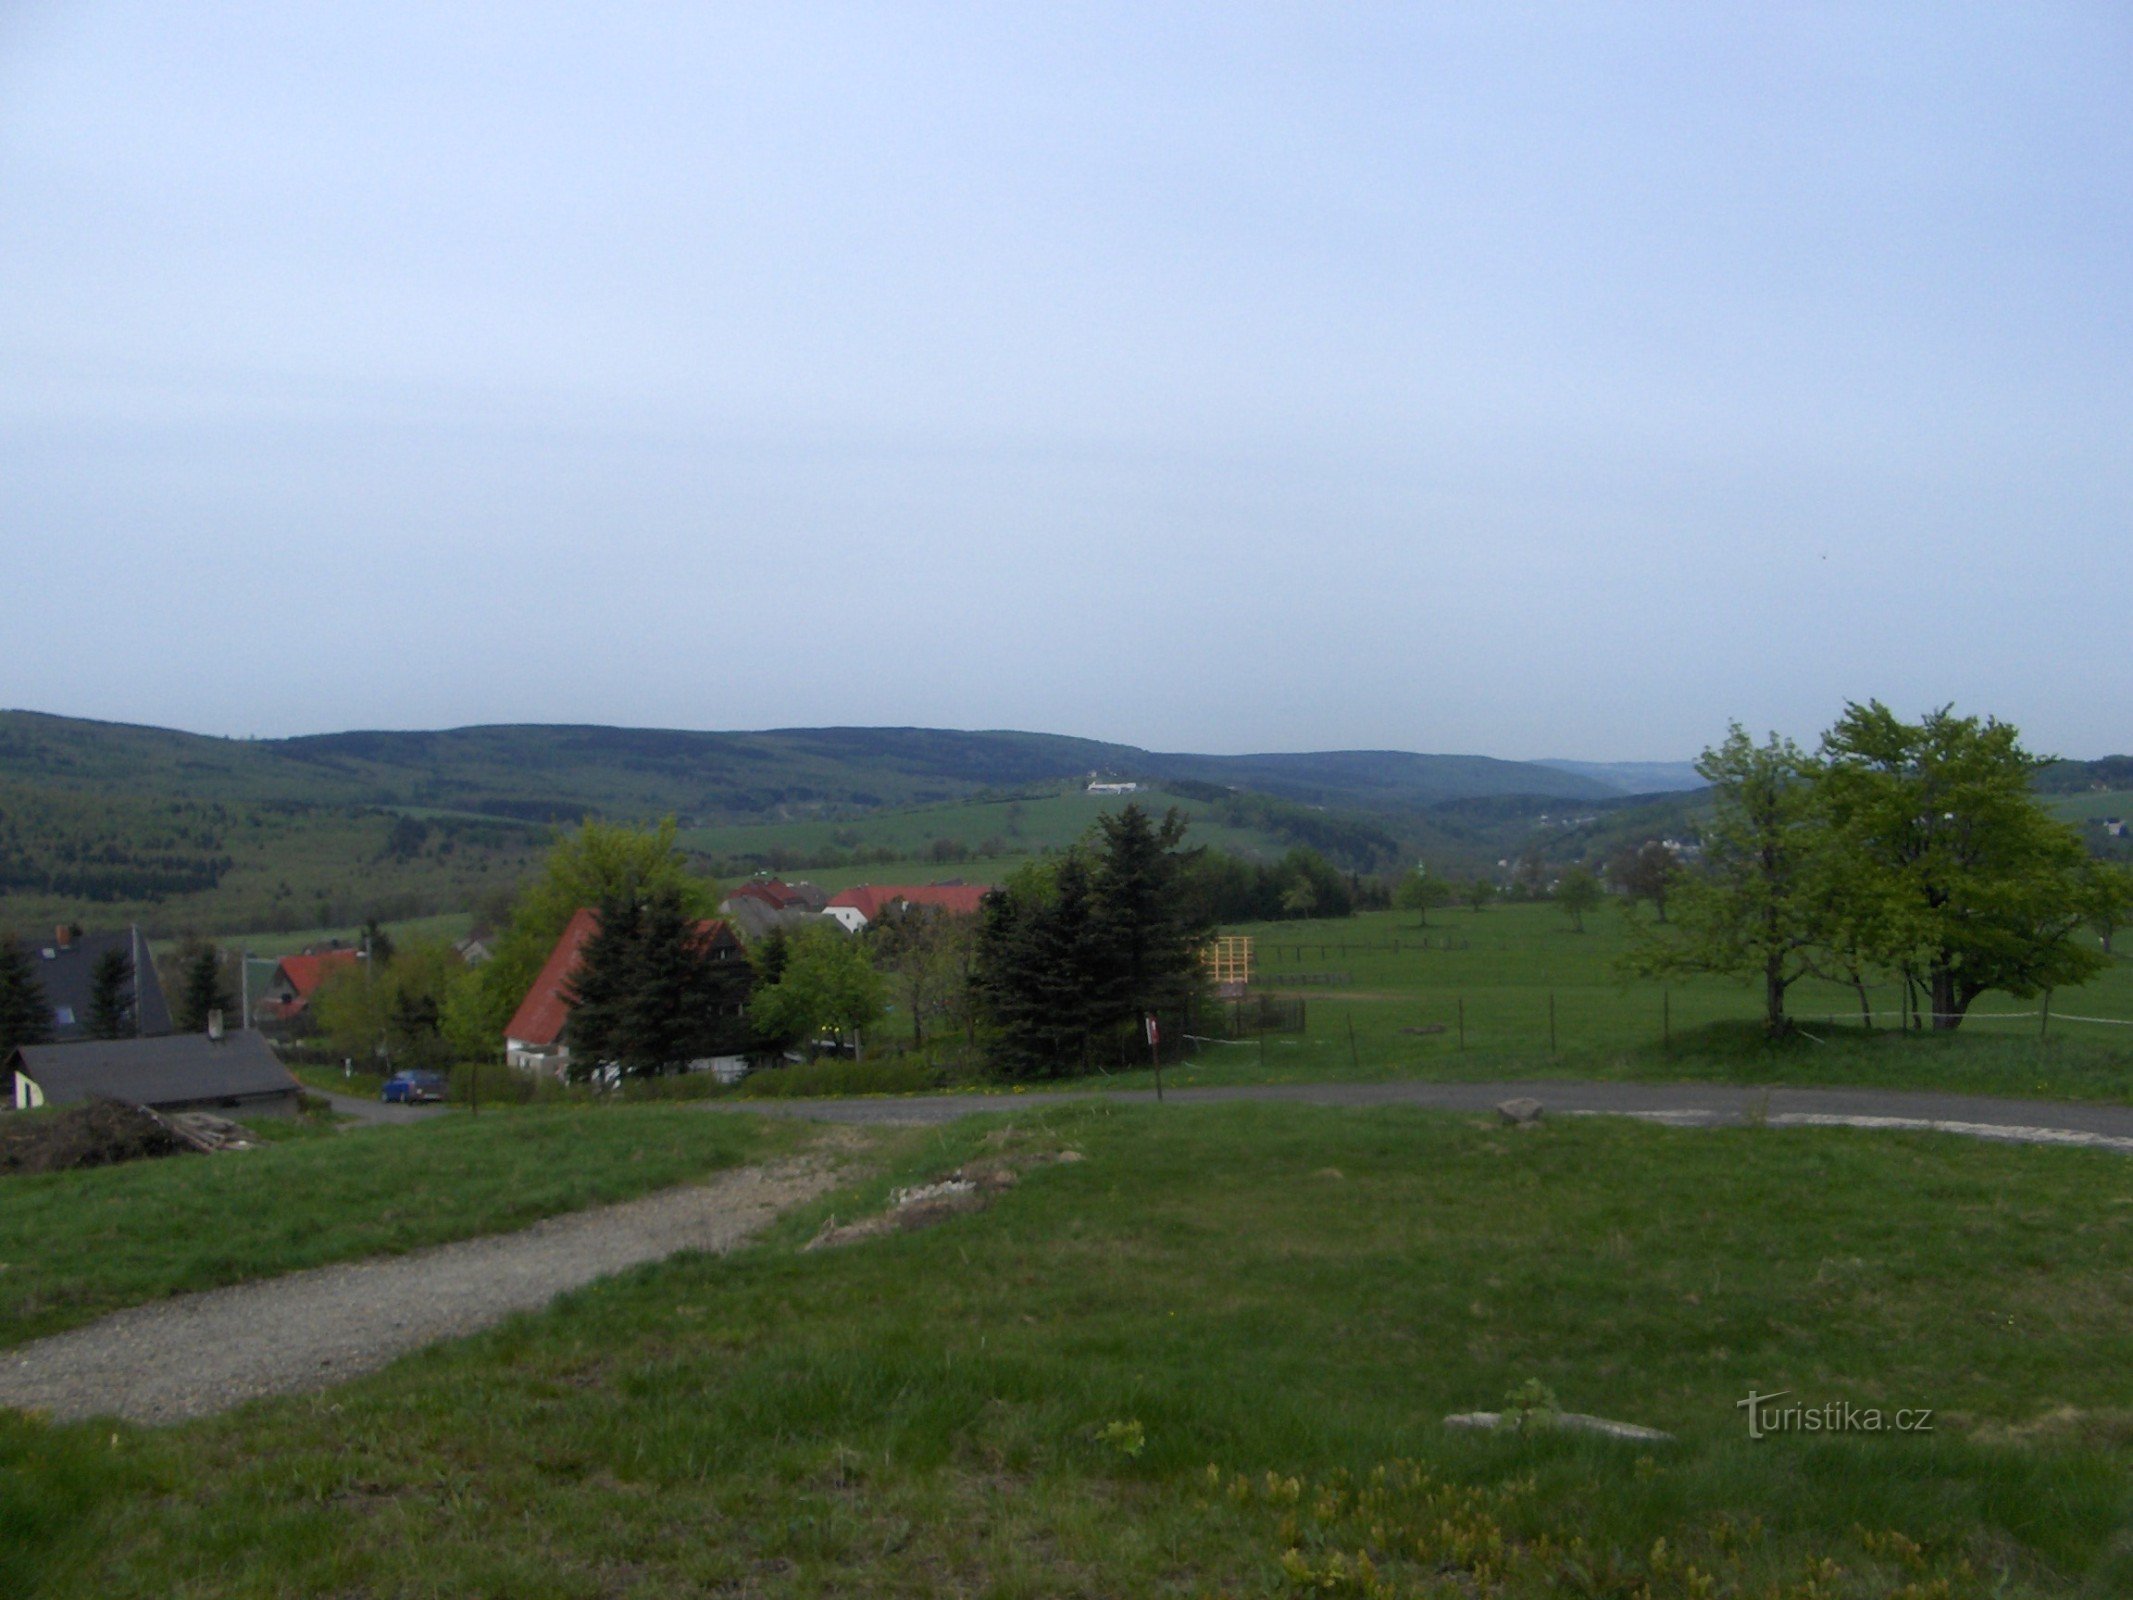 Näkymä kohti Mount St. Kateřiny ja Kamenné vrchin harju